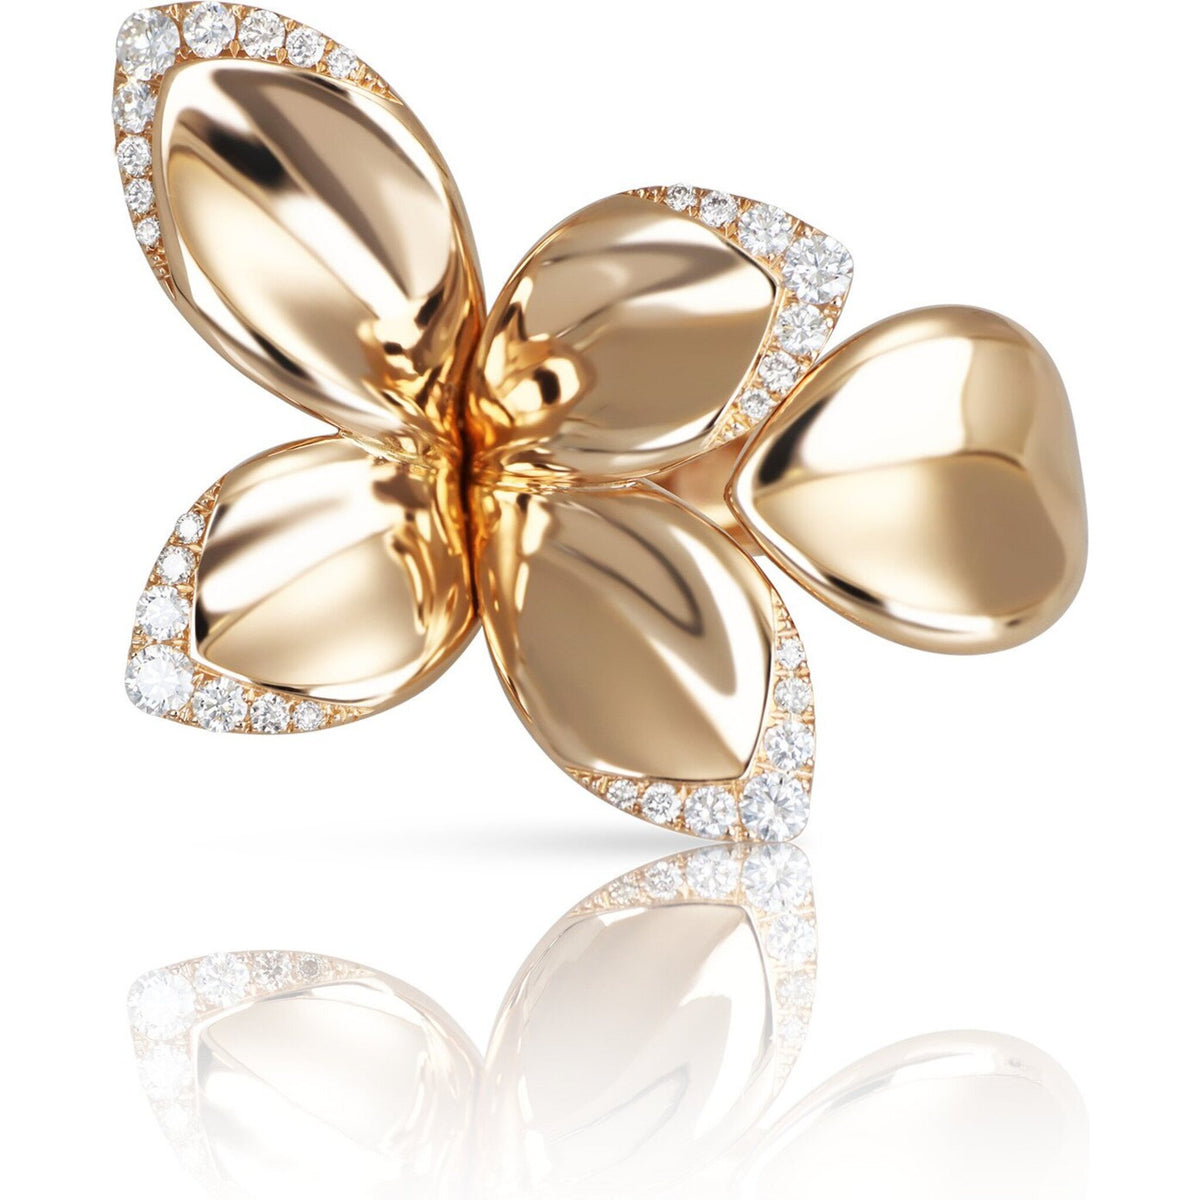 Pasquale Bruni - Giardini Segreti Five Leaves Small Flower Ring in 18k Rose Gold with White Diamonds